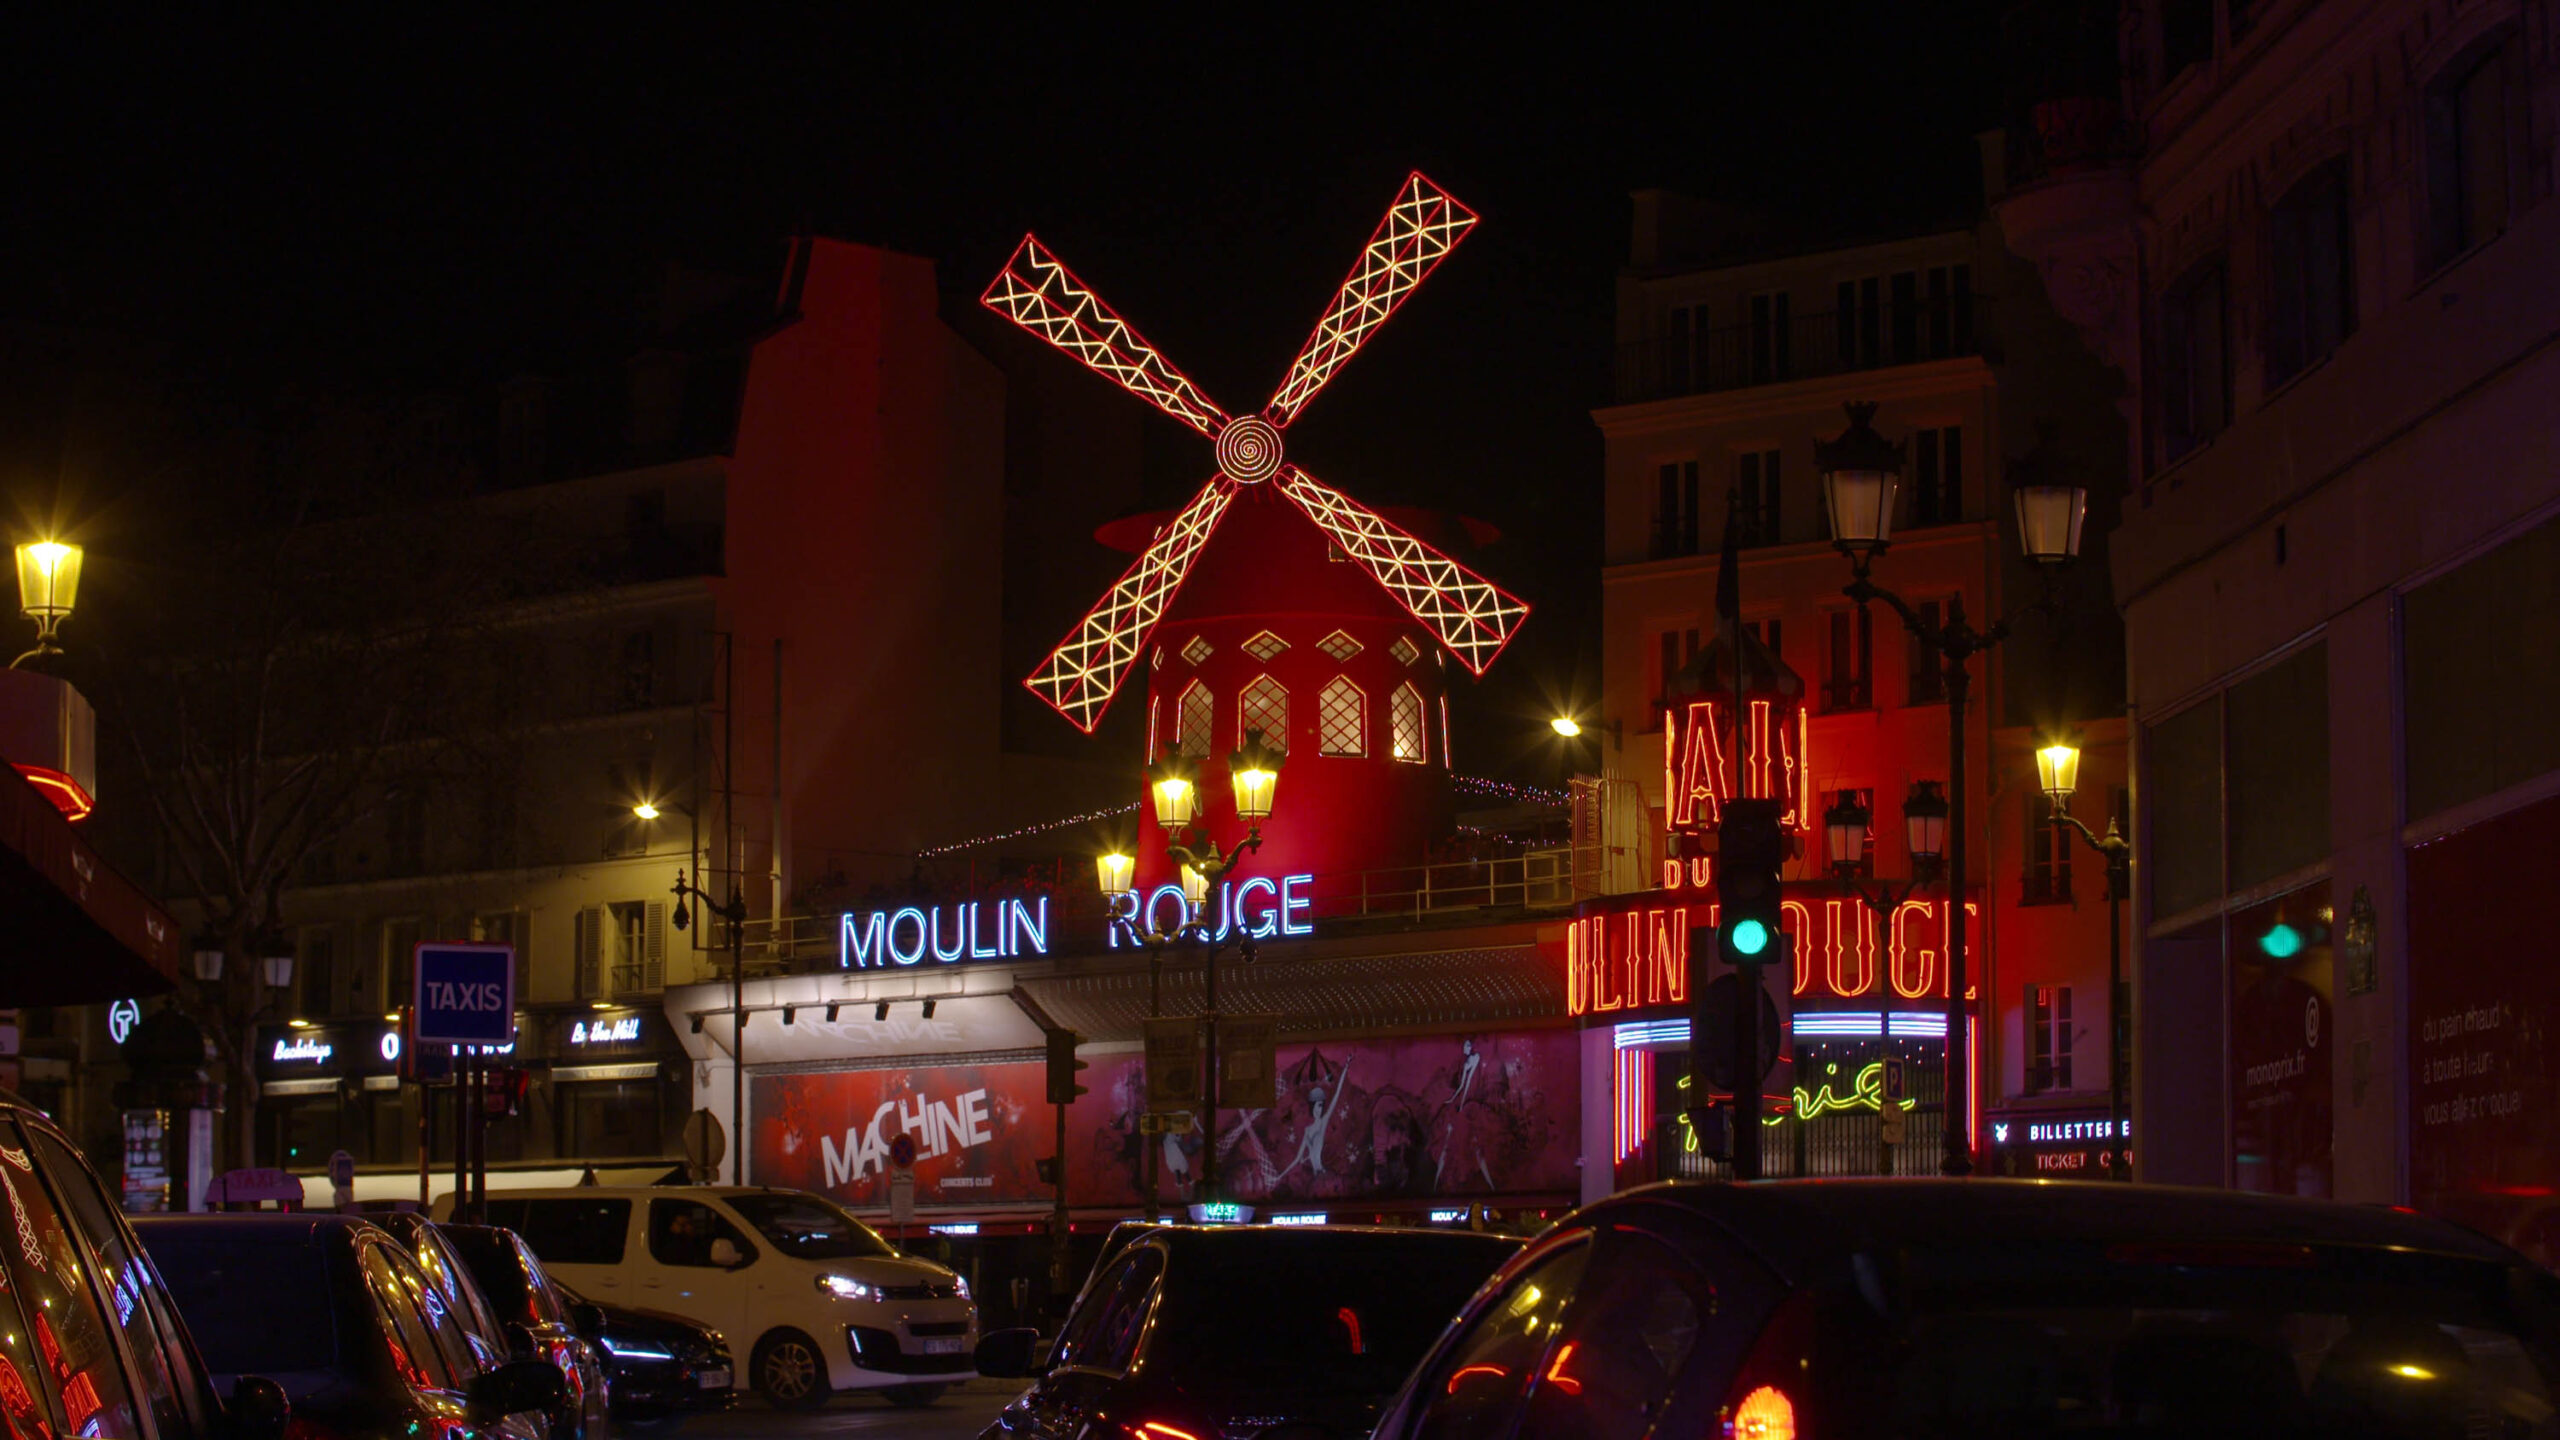 Moulin Rouge - Dentro la magia [credit: courtesy of Cielo]